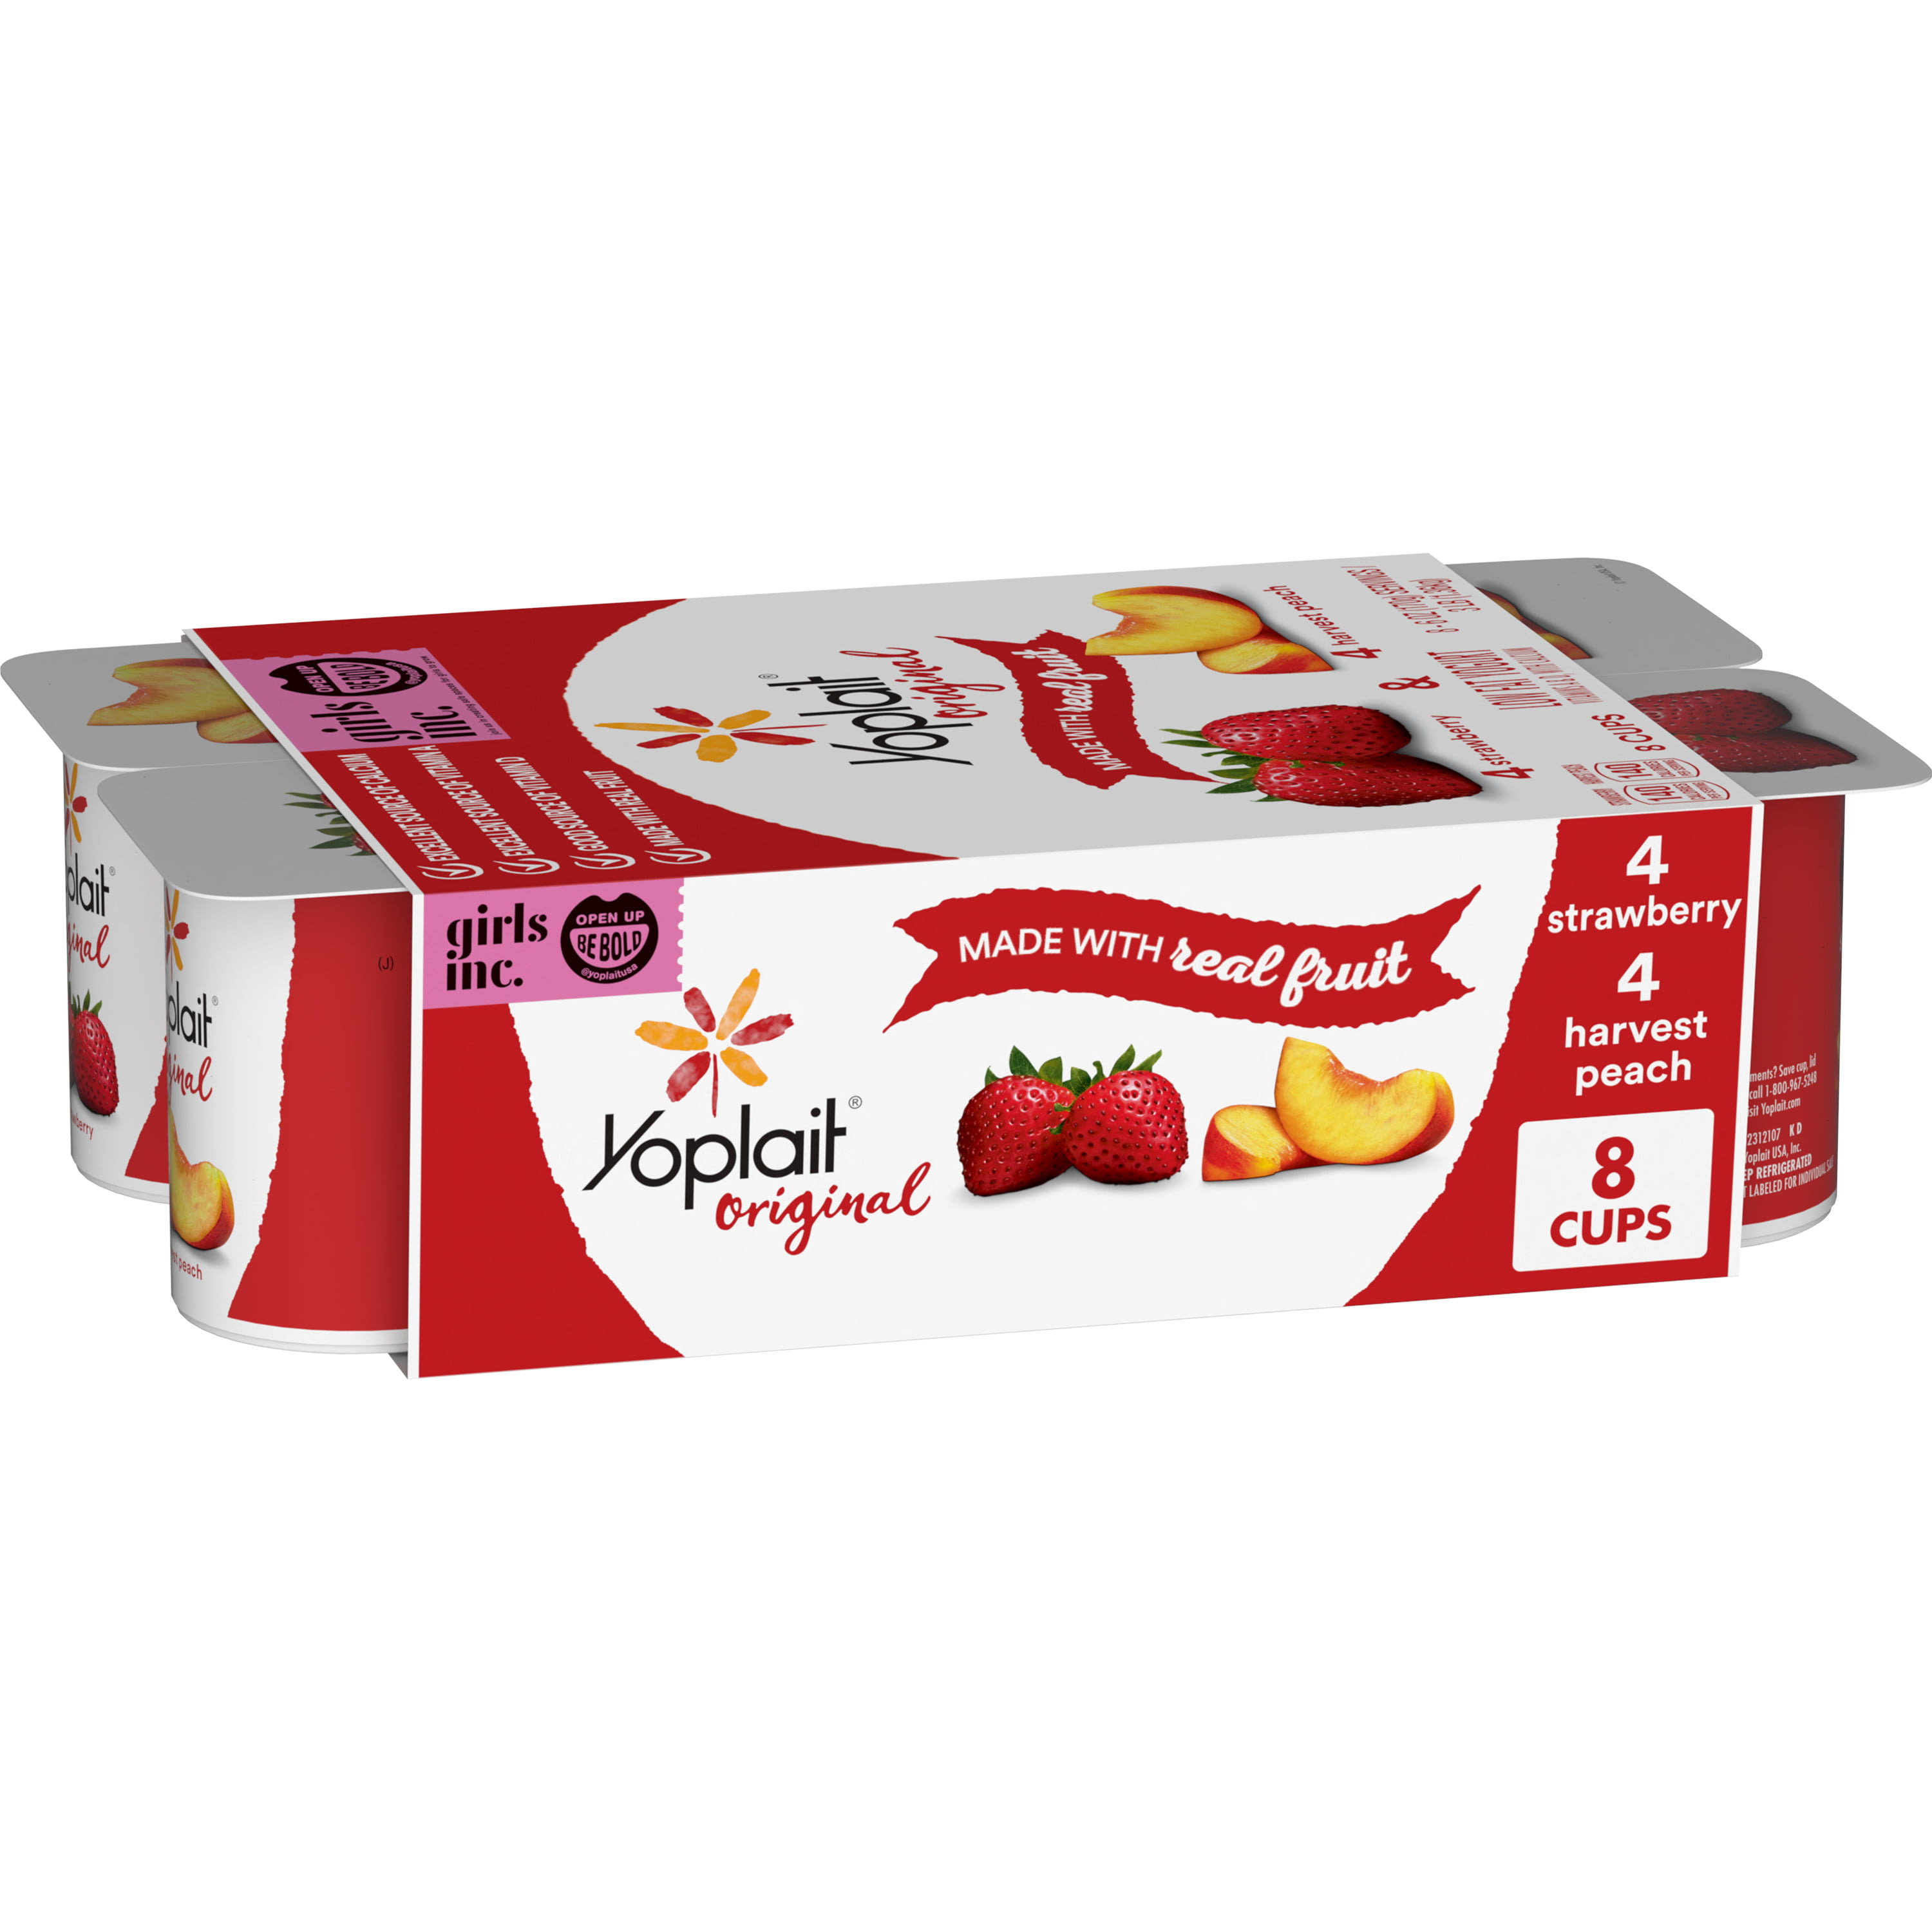 Oikos Triple Zero Mixed Berry Greek Yogurt, 5.3 Oz. Cups, 4 Count